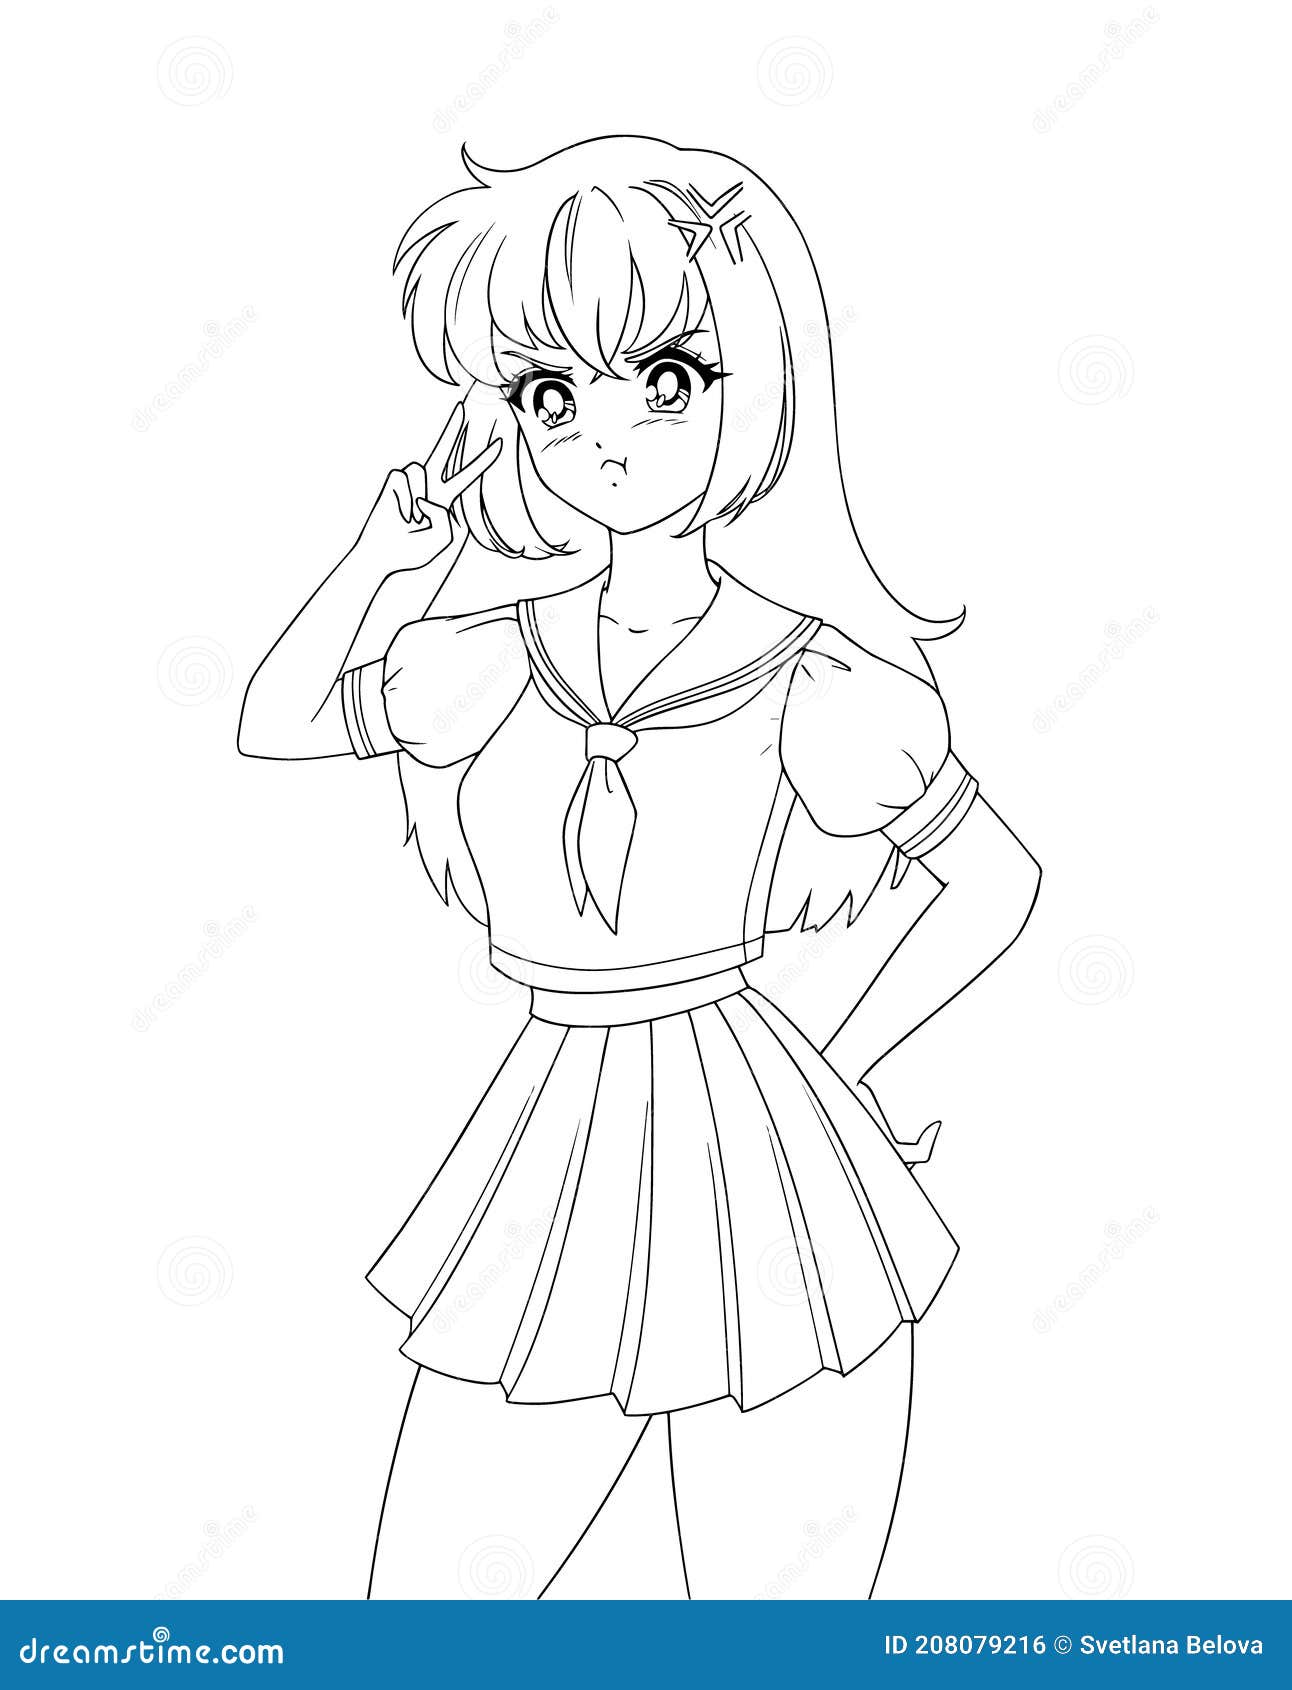 Cute Anime Manga Girl Wearing School Uniform Isolated on White Background  Stock Vector - Illustration of gesture, japanese: 208079216